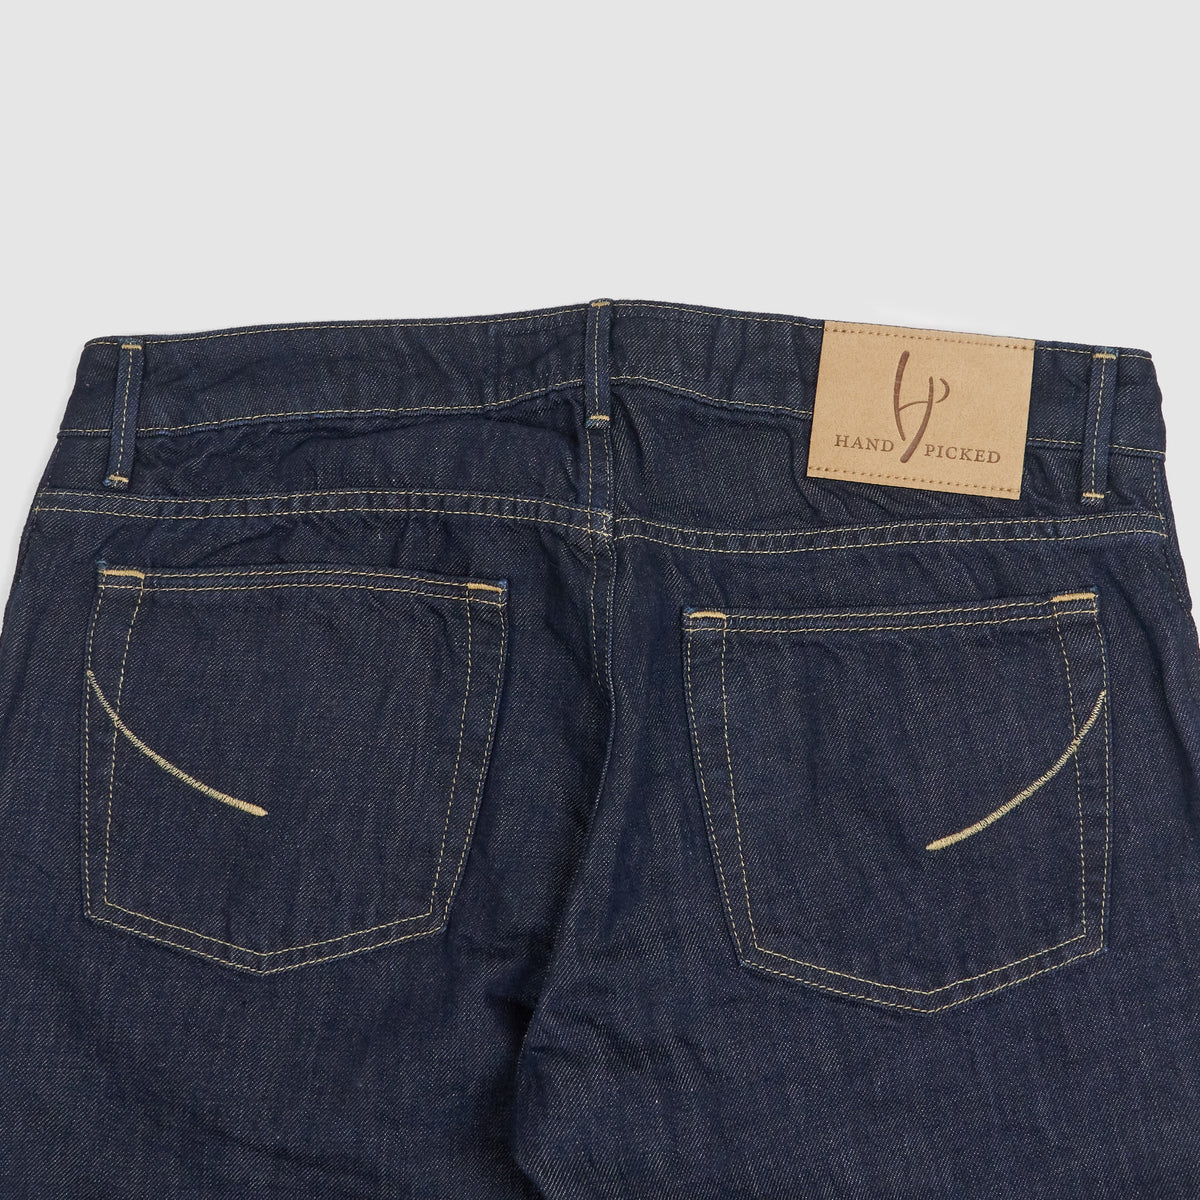 Handpicked 5-Pocket Slim Fit Jeans